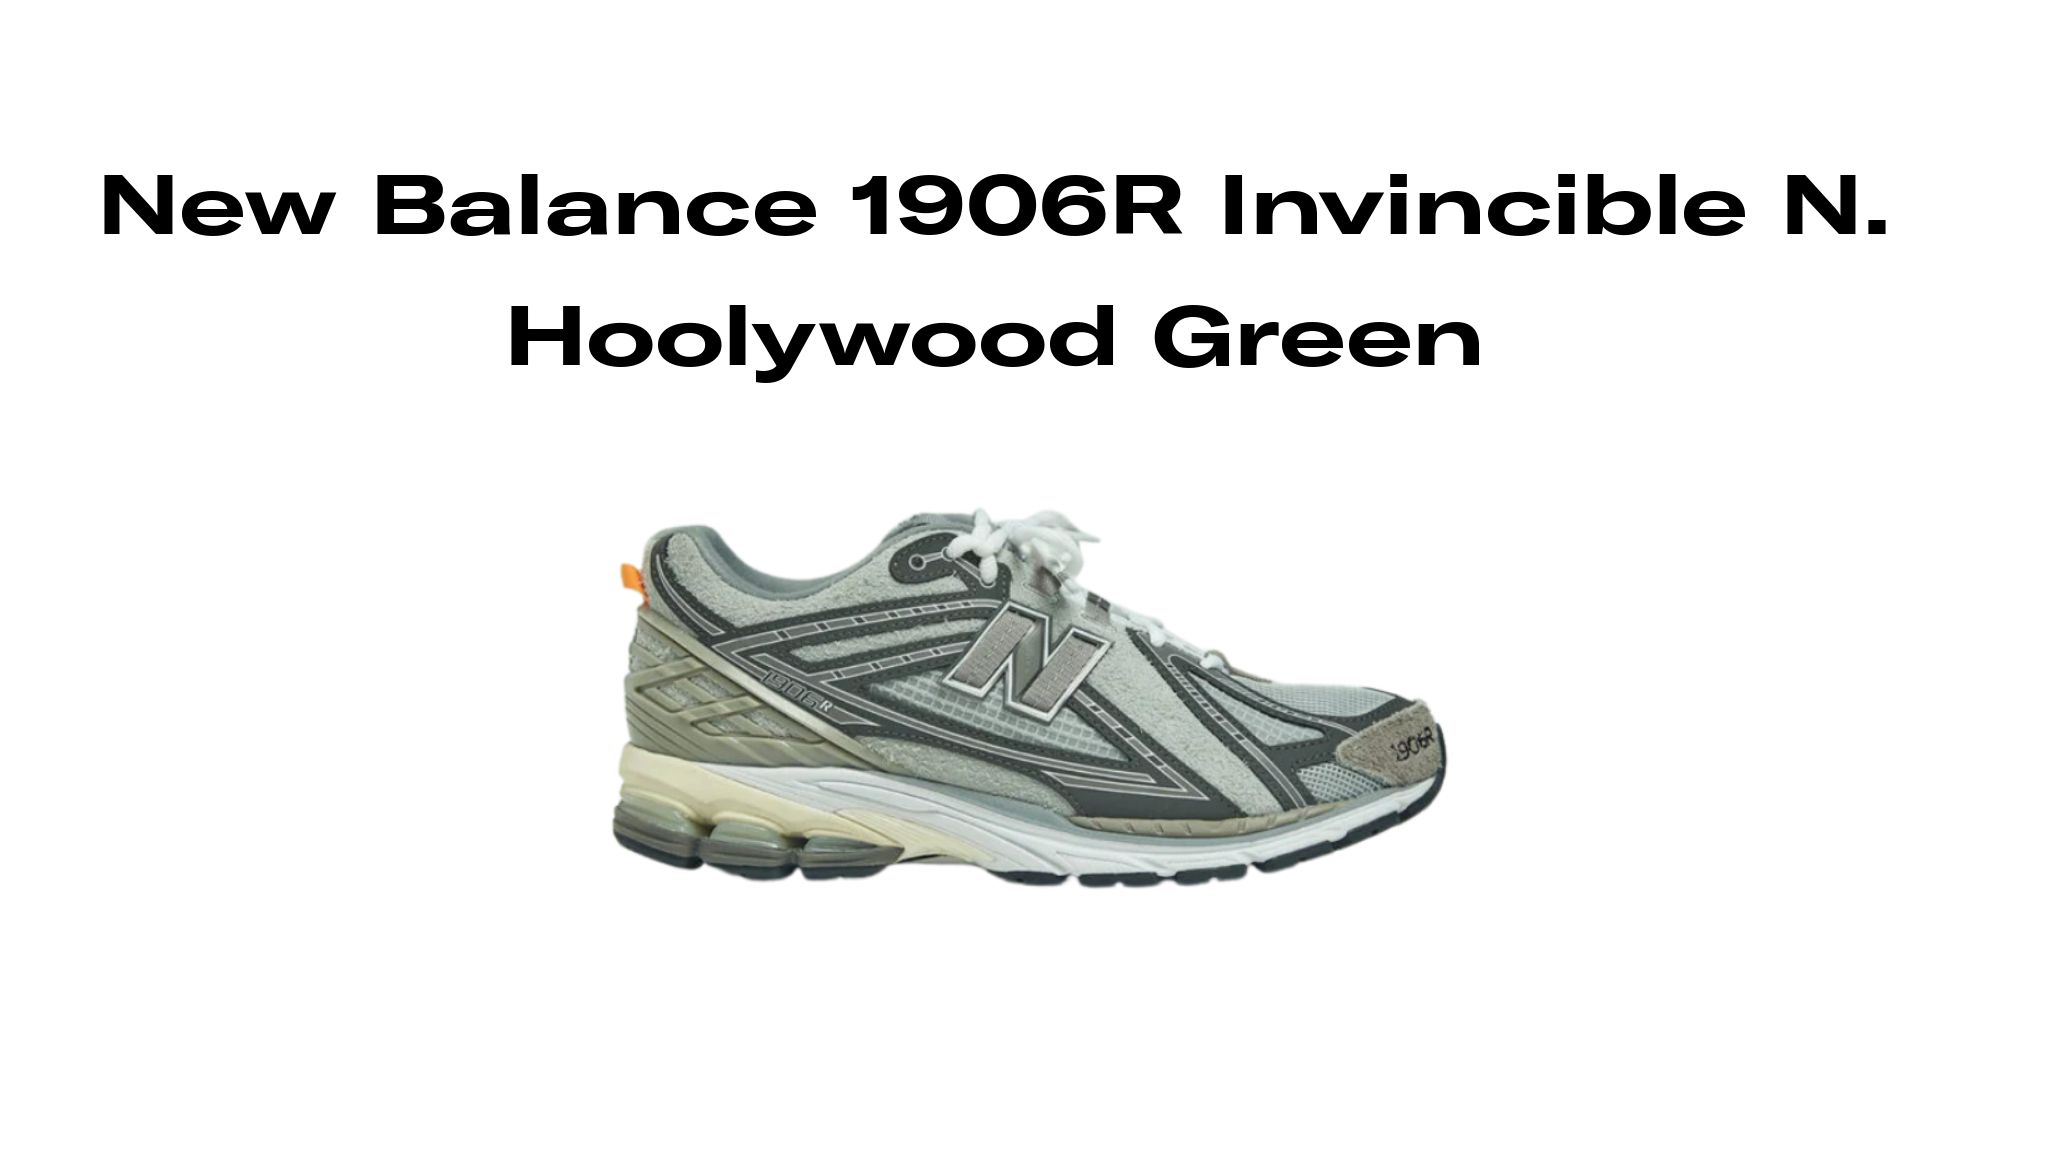 New Balance 1906R Invincible N. Hoolywood Green, Raffles and 